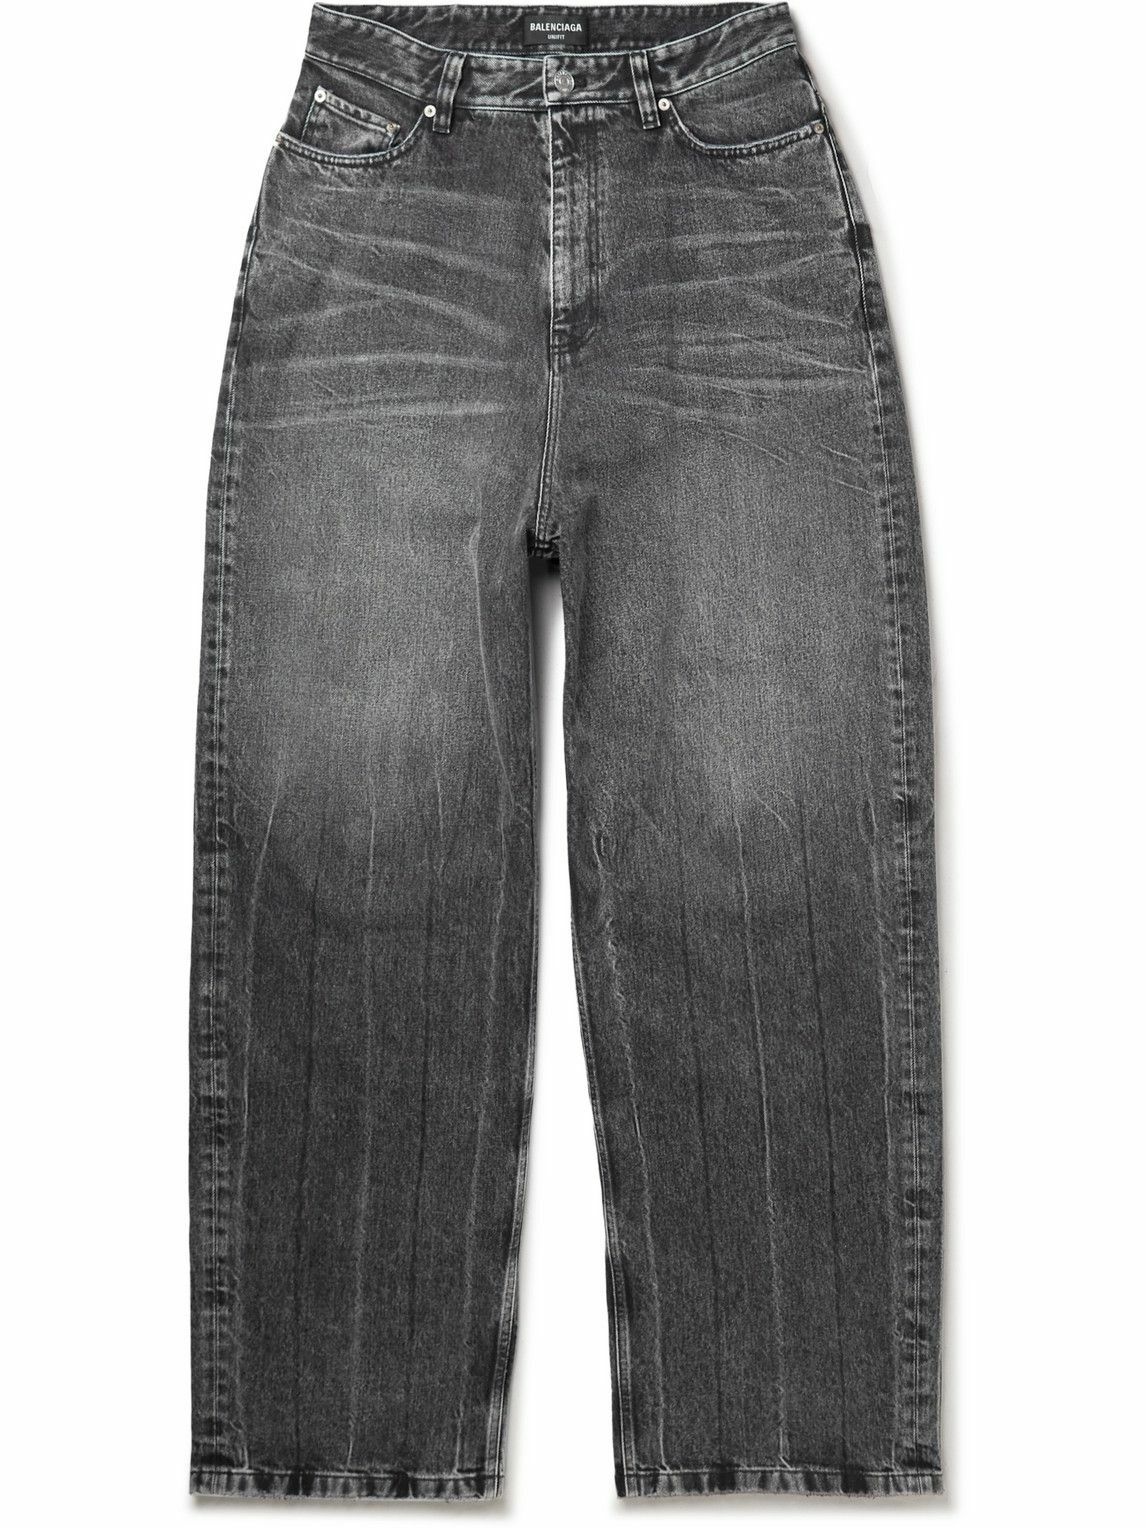 Chia sẻ 61 balenciaga wide leg jeans siêu đỉnh  trieuson5